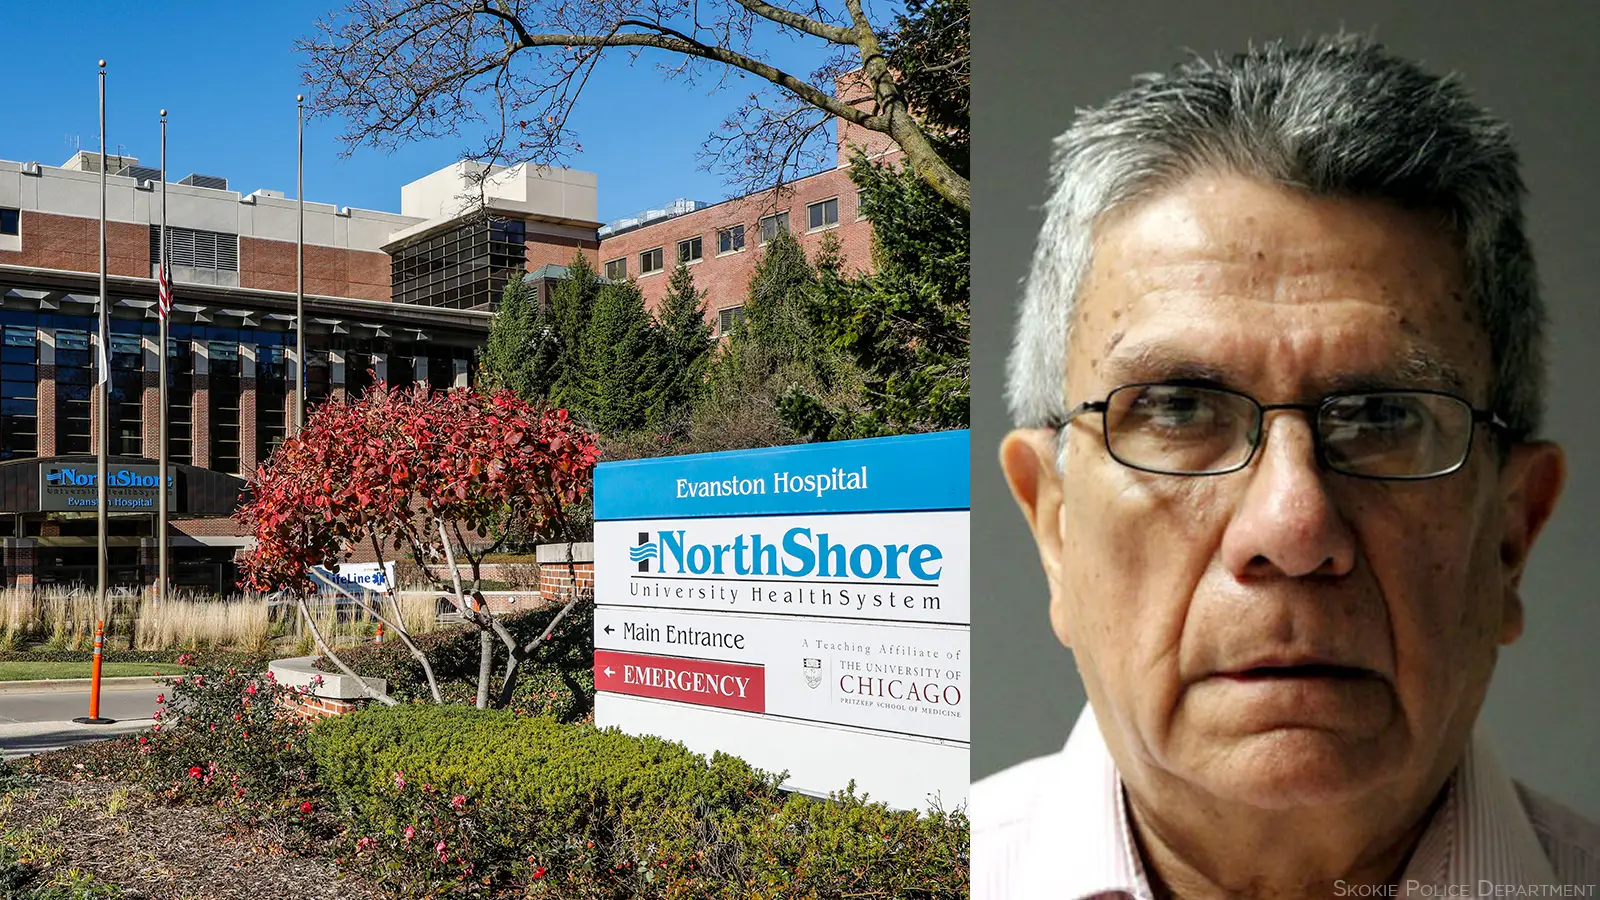 Jane Doe 27 alleges sexual assault by Gynecologist Fabio Ortega, NorthShore University HealthSystem